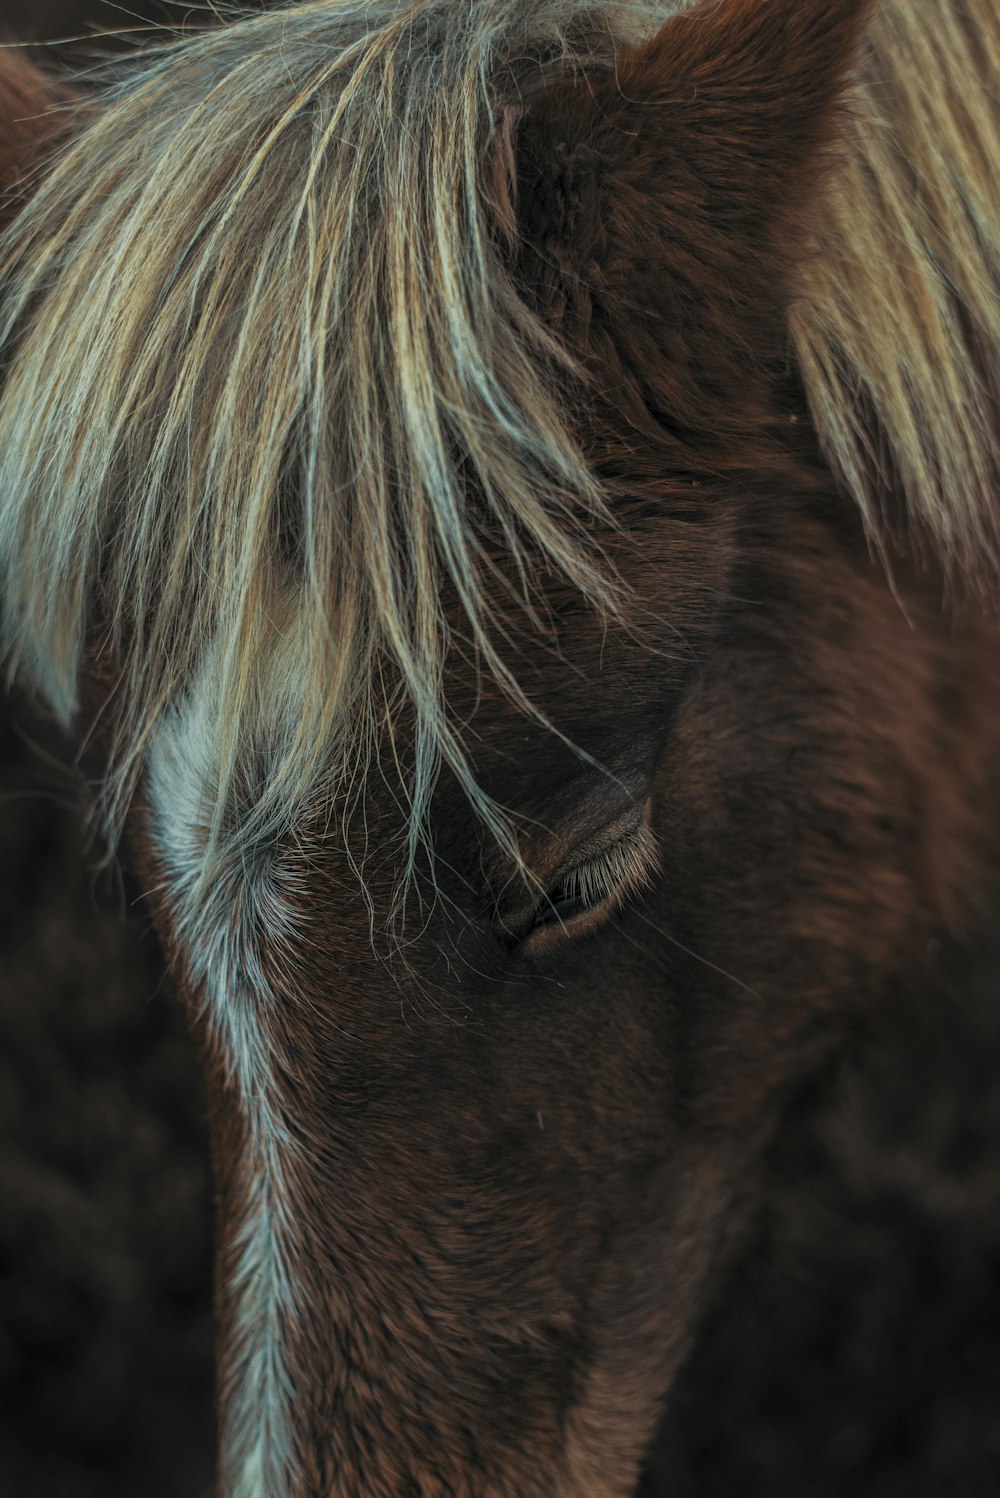 tilt shift photography of a foal